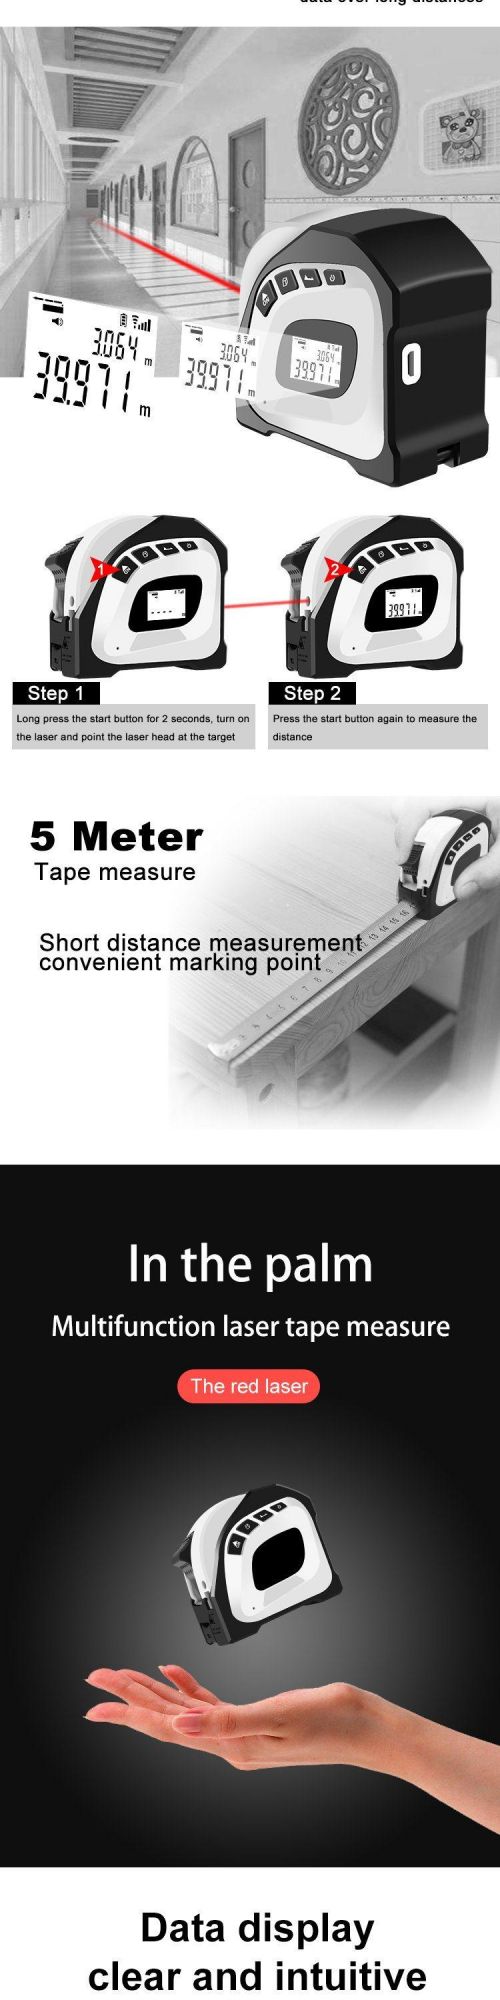 40m Laser Range Finder Distance Meter Tape Measure Cheap